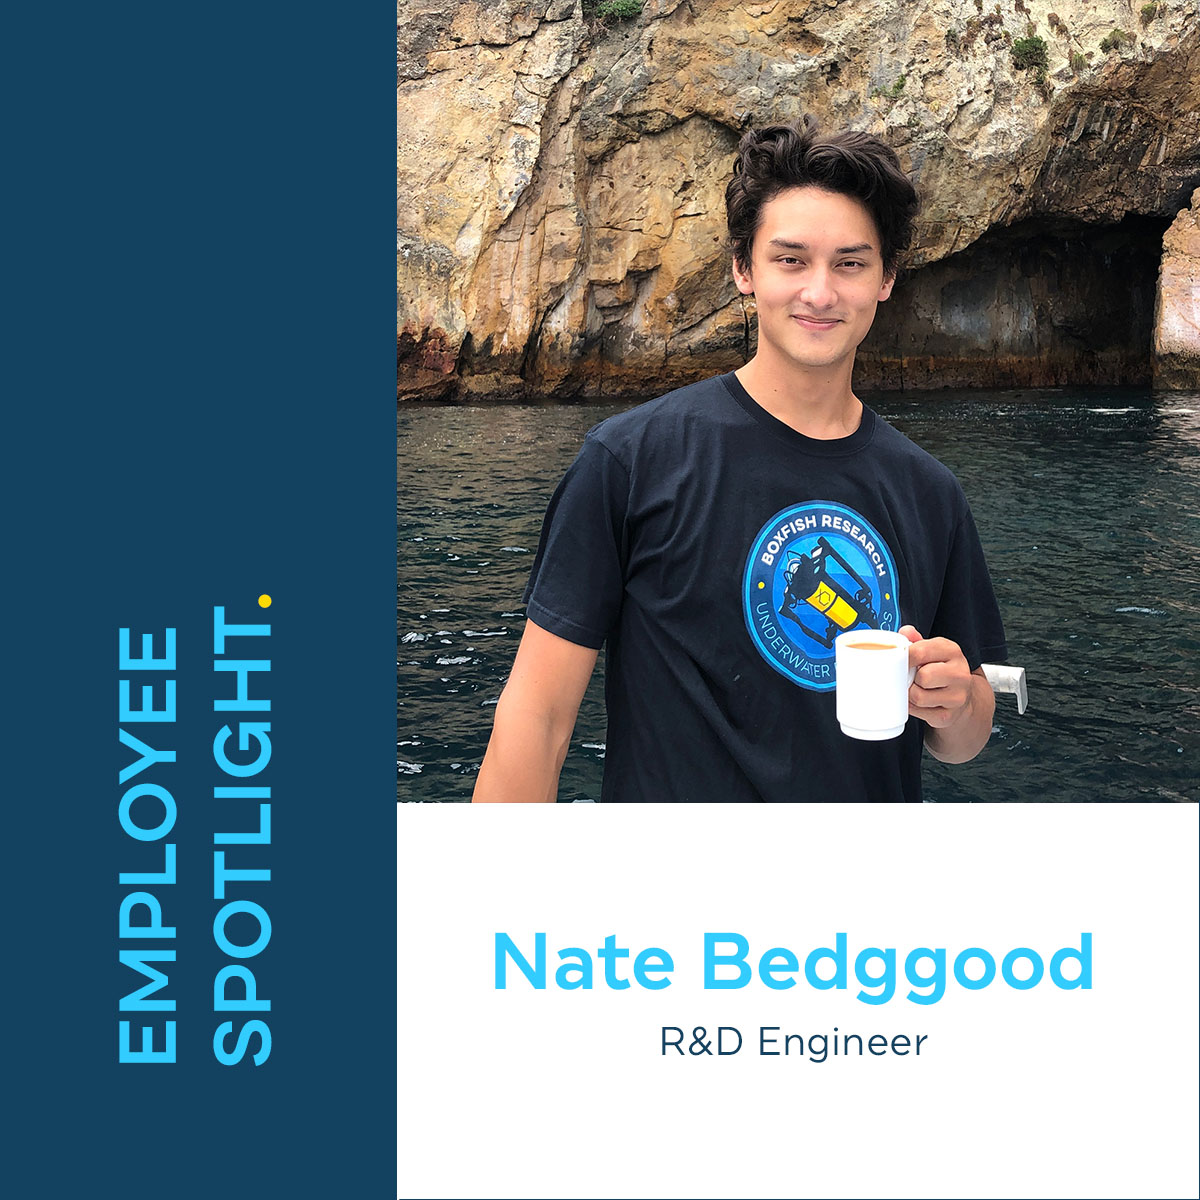 Nate Bedggood, Research & Development Engineer at Boxfish Research